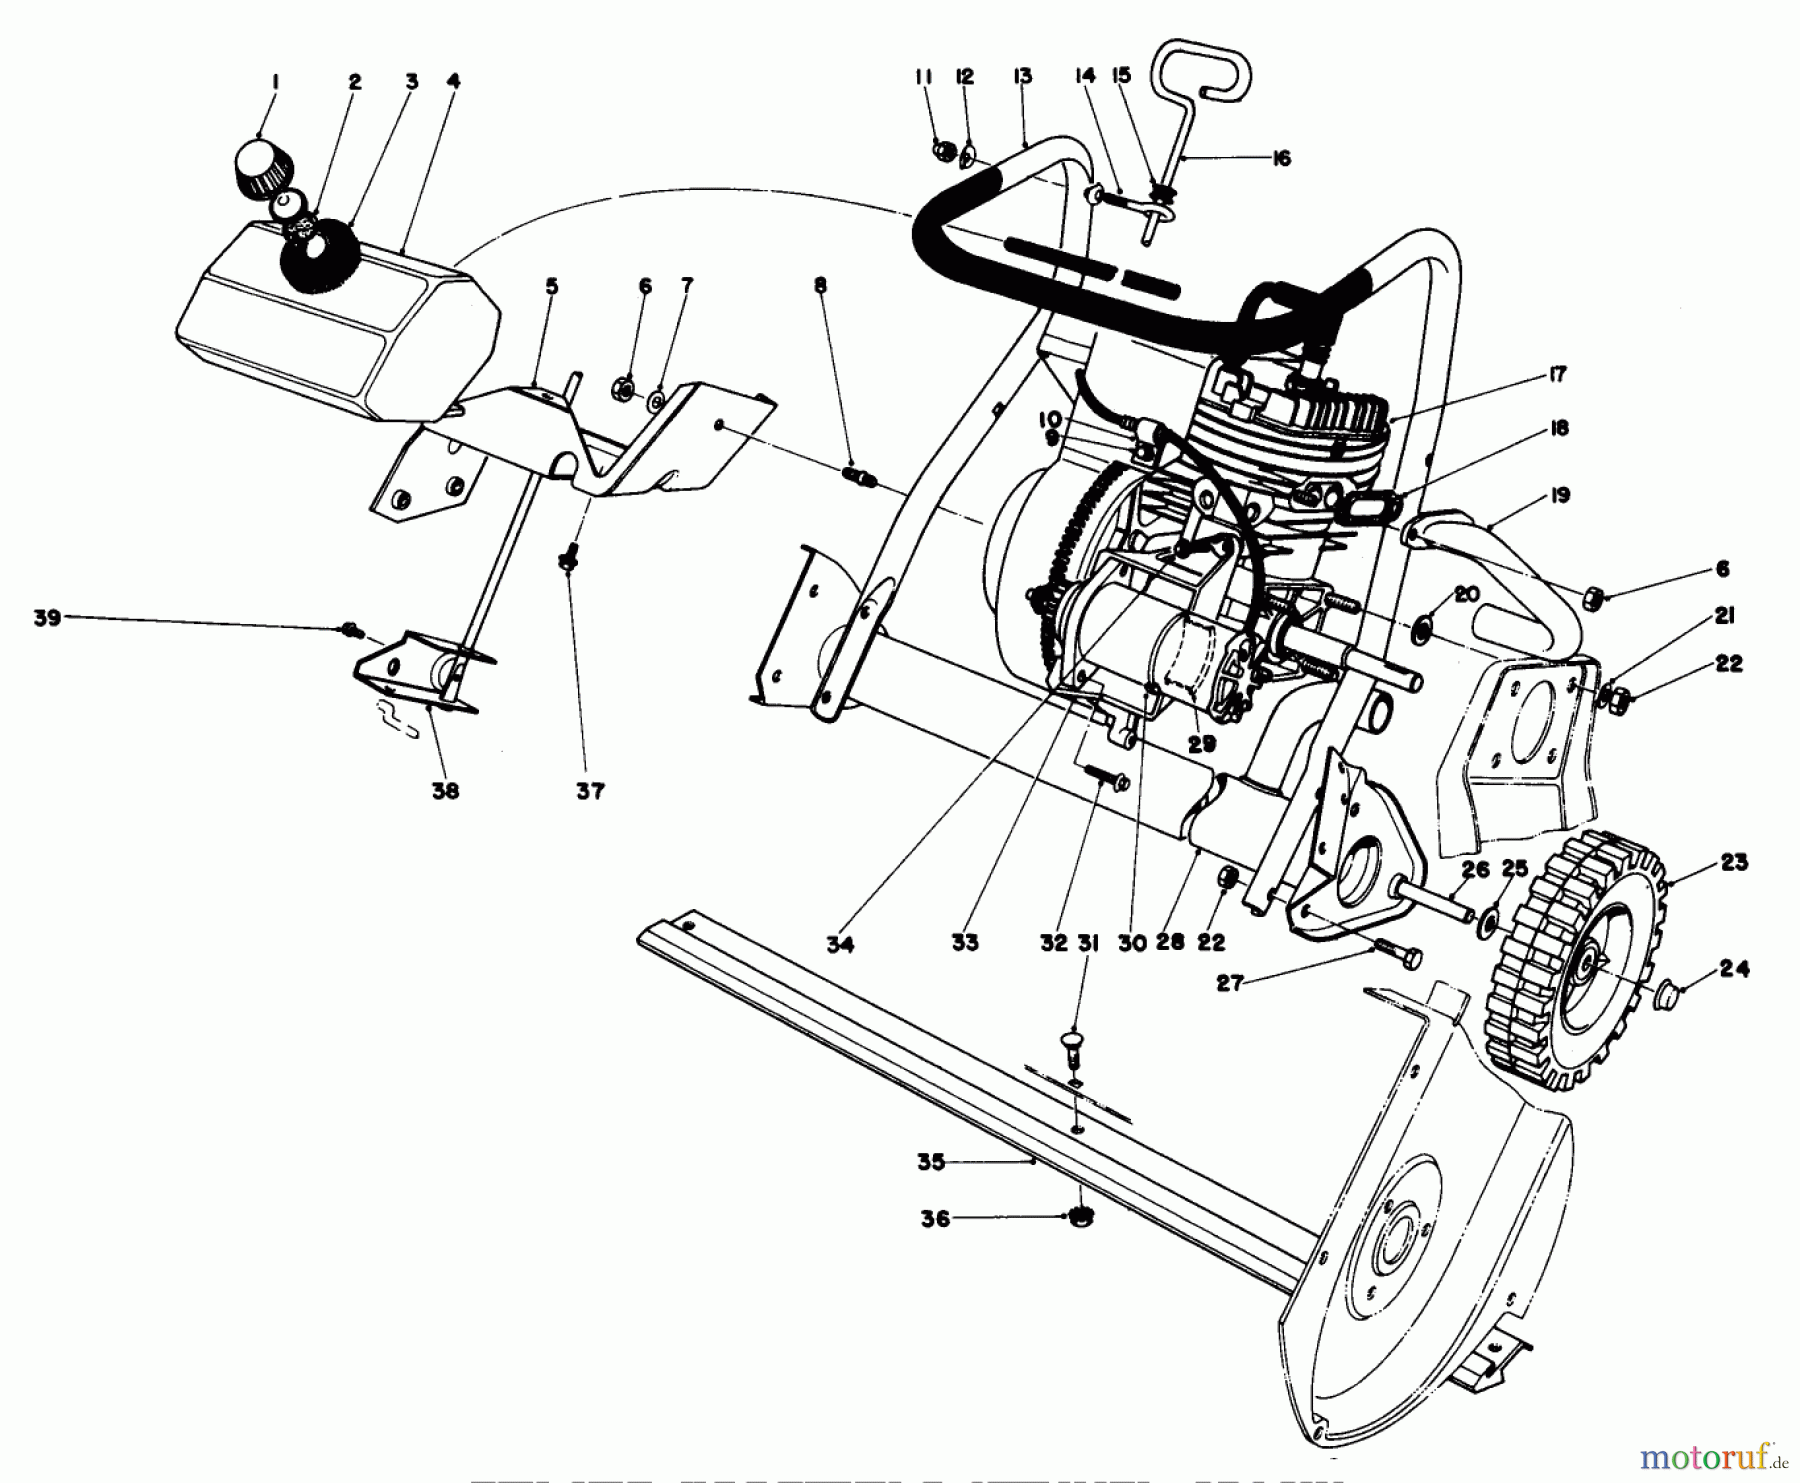  Toro Neu Snow Blowers/Snow Throwers Seite 1 38130 (S-200) - Toro S-200 Snowthrower, 1981 (1000351-1999999) ENGINE ASSEMBLY (MODEL 38130)